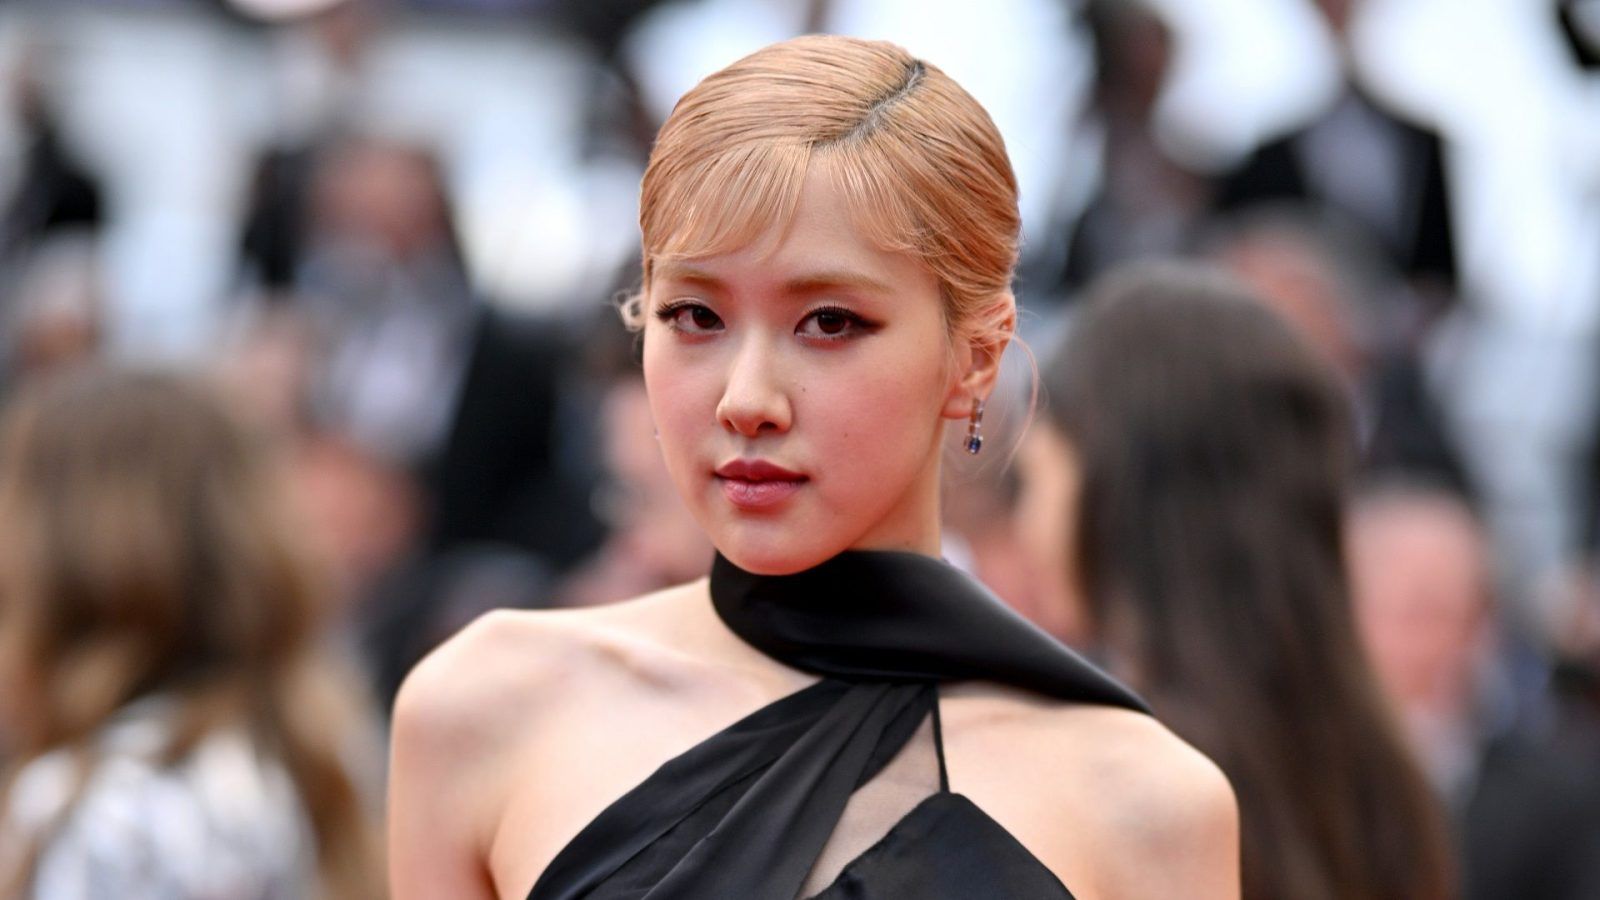 The Asian glitterati take over Cannes Film Festival: 8 best red